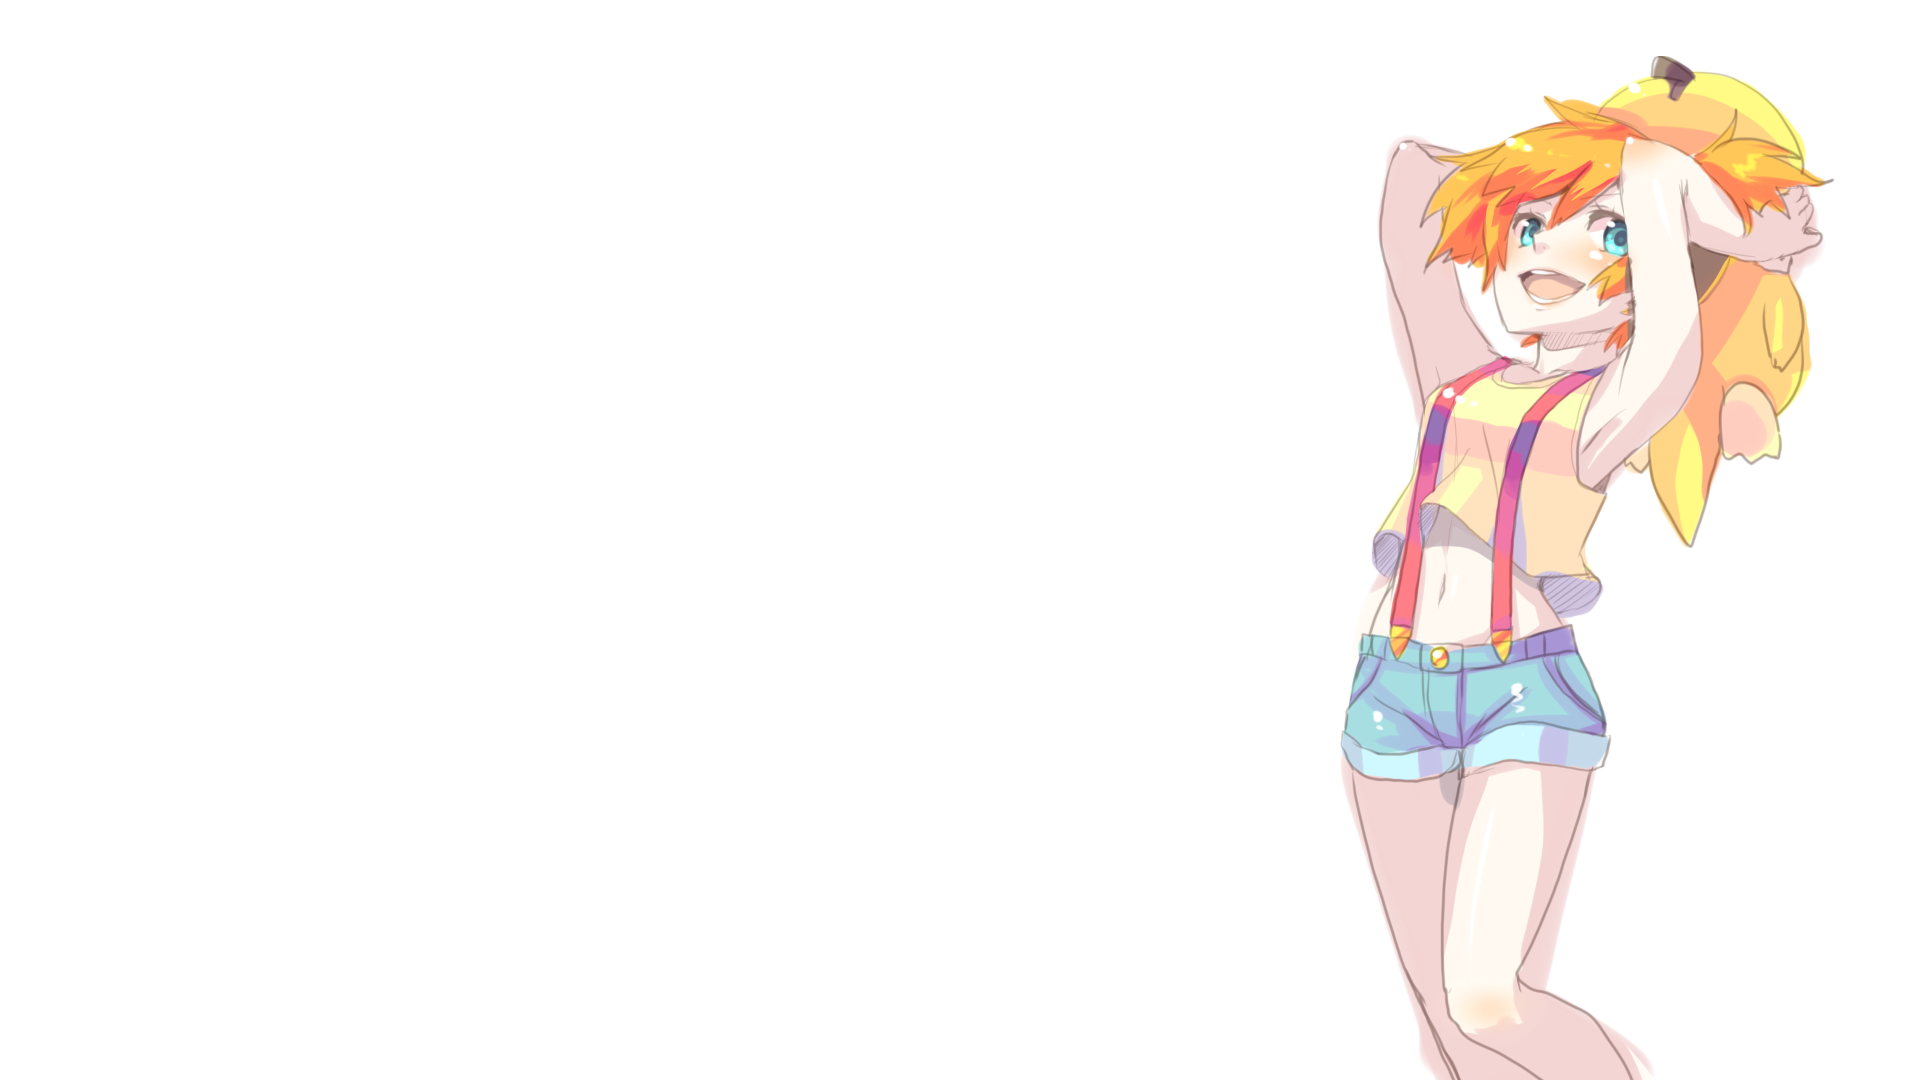 Anime 1920x1080 Pokémon Misty (Pokémon) minimalism video games Psyduck short shorts suspenders redhead video game girls